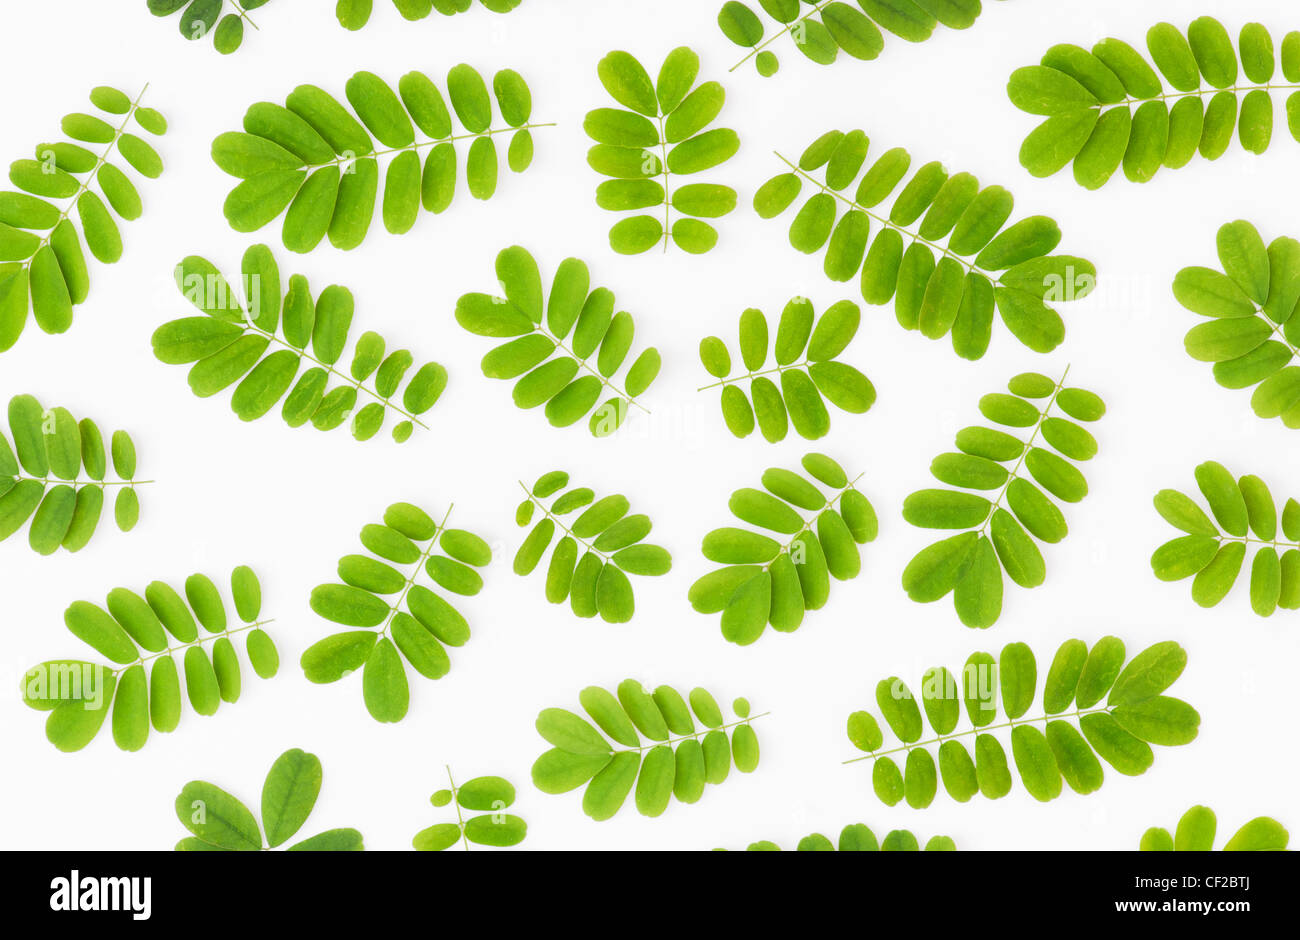 Indian tree leaf pattern on white background Stock Photo